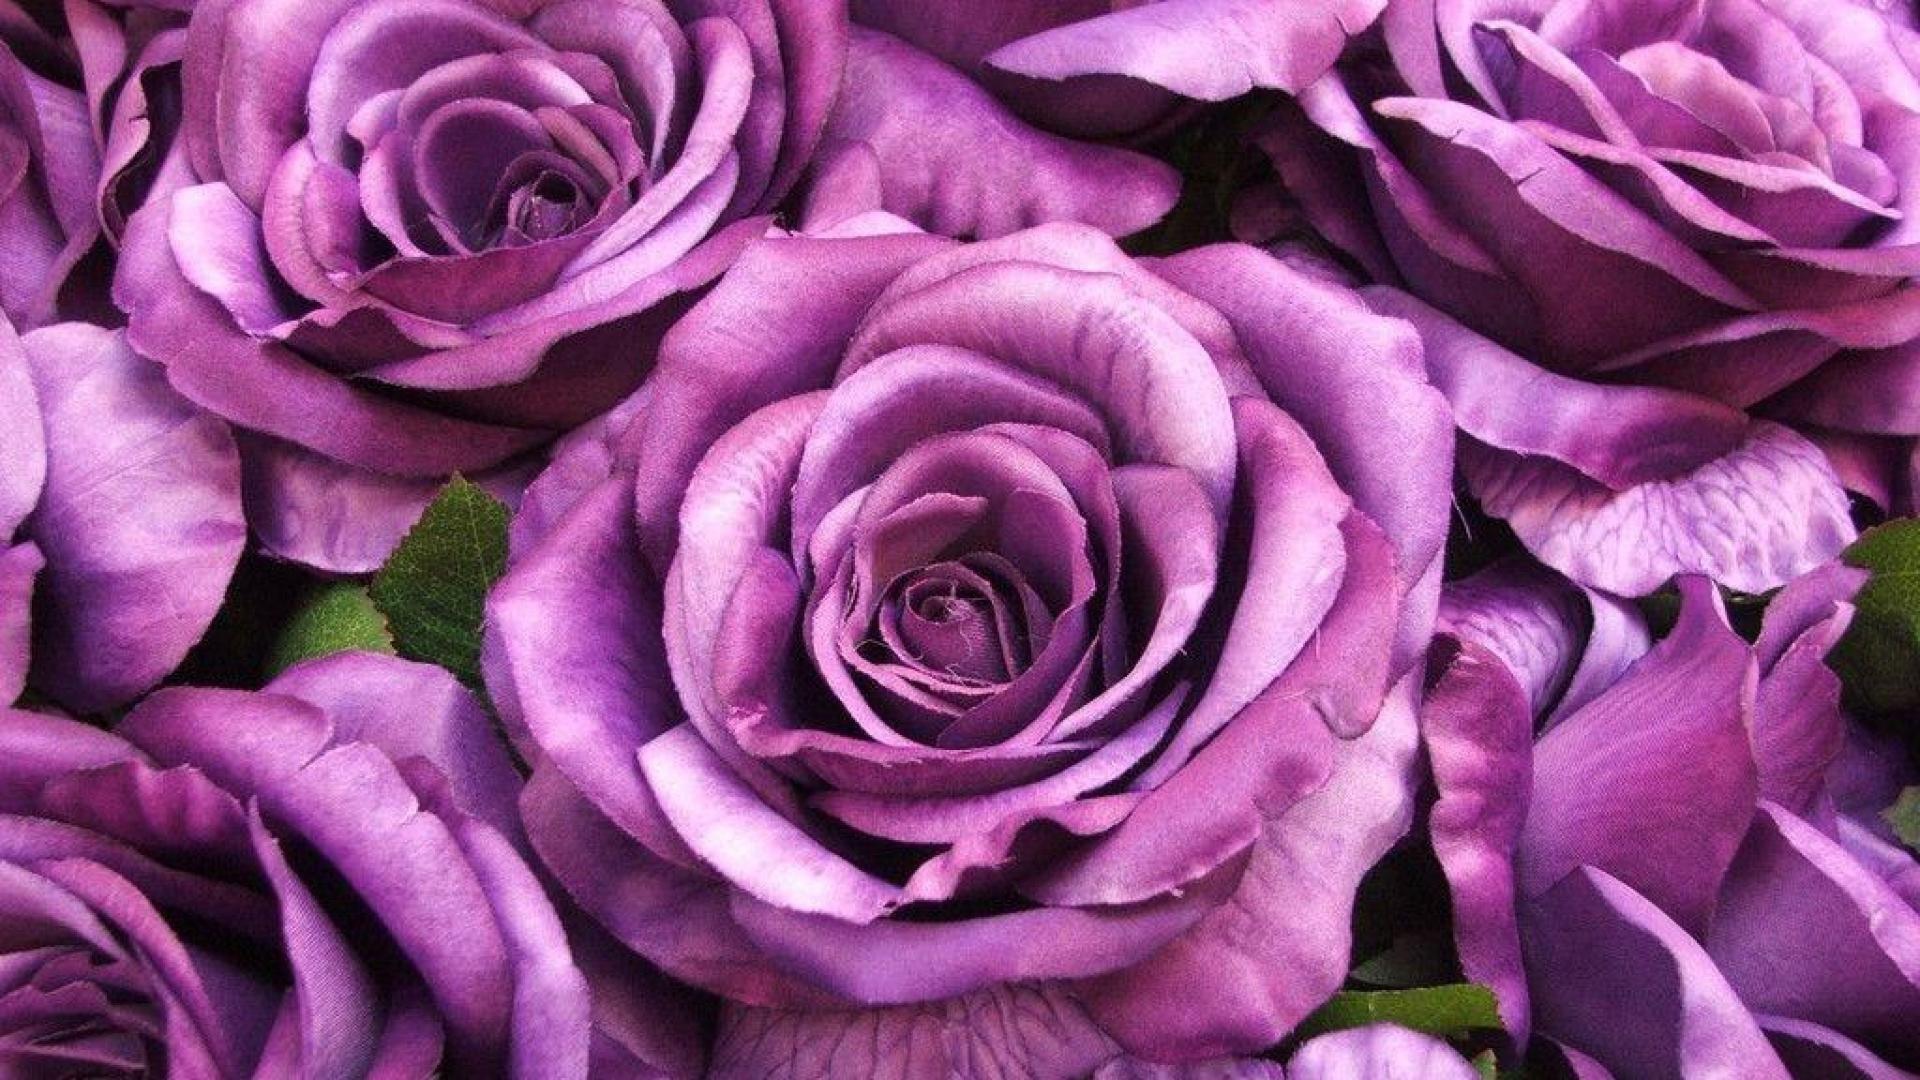 Big purple roses